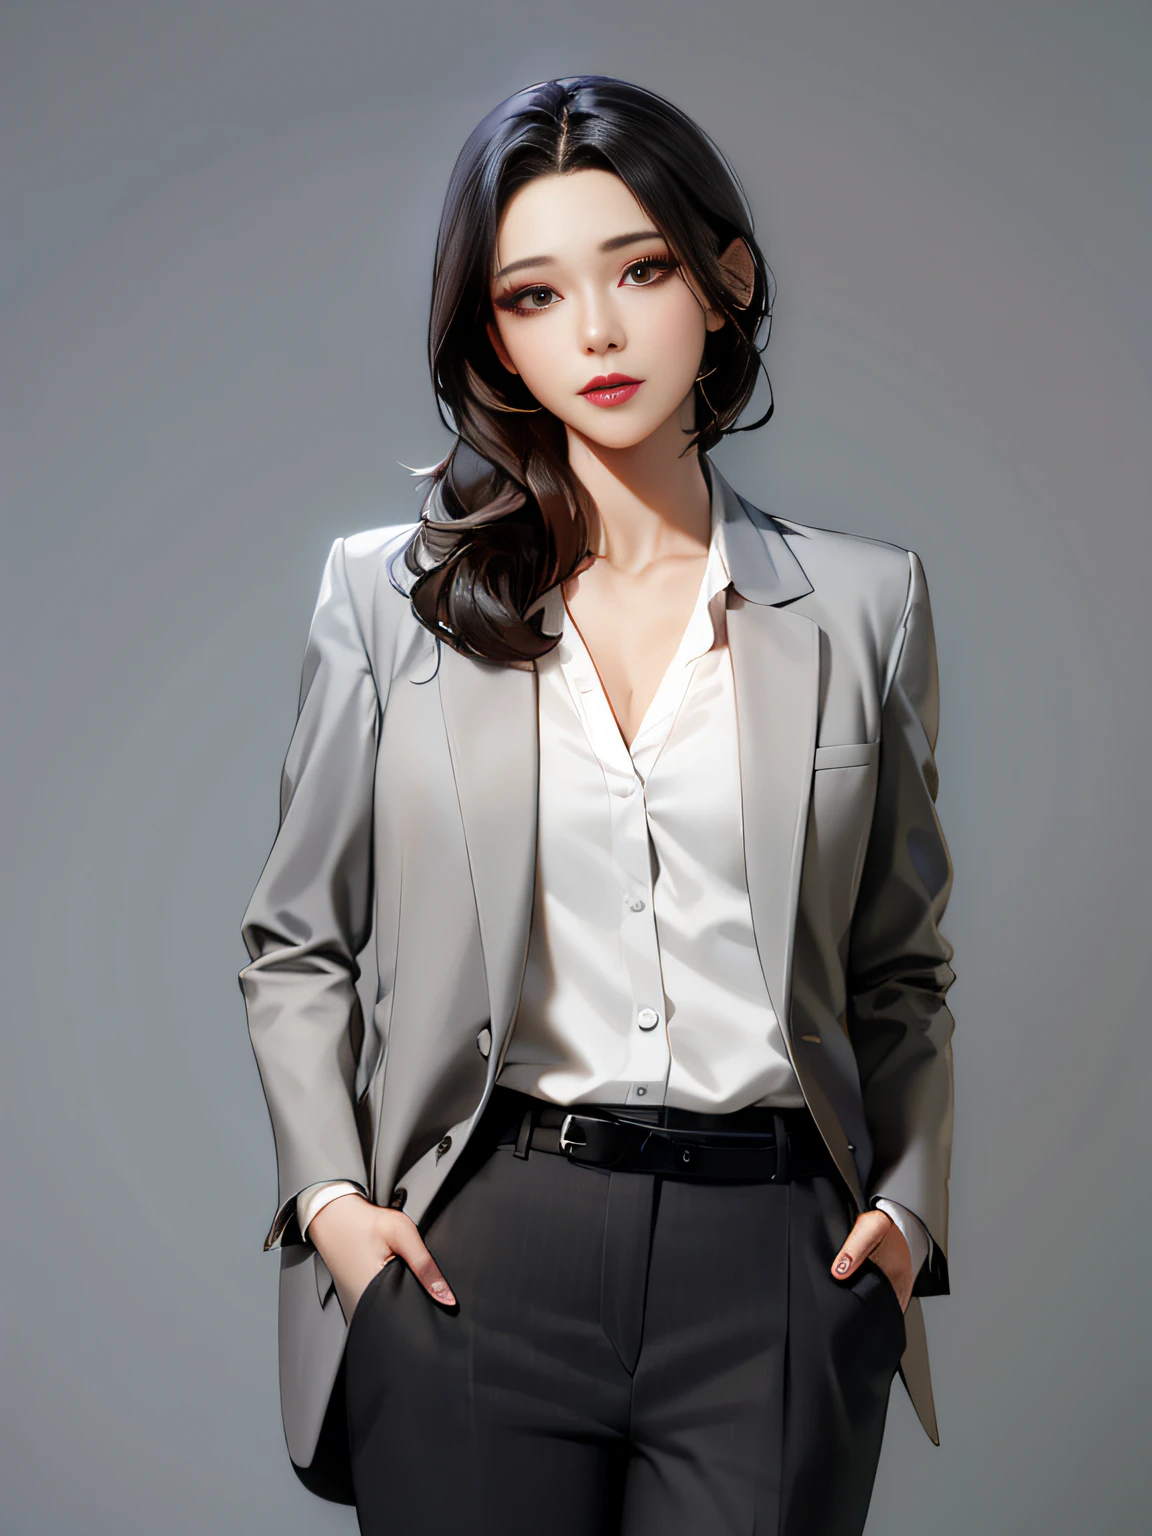 Arad woman in gray suit and white shirt poses for a photo, Korean woman, korean women's fashion model, female actress from korea, Girl in suit, Lee Ji-eun, lee ji eun, shin min jeong, dressed in a suit, sangsoo jeong, Woman in a suit, Choi Hyun-hwa, hwang se - on